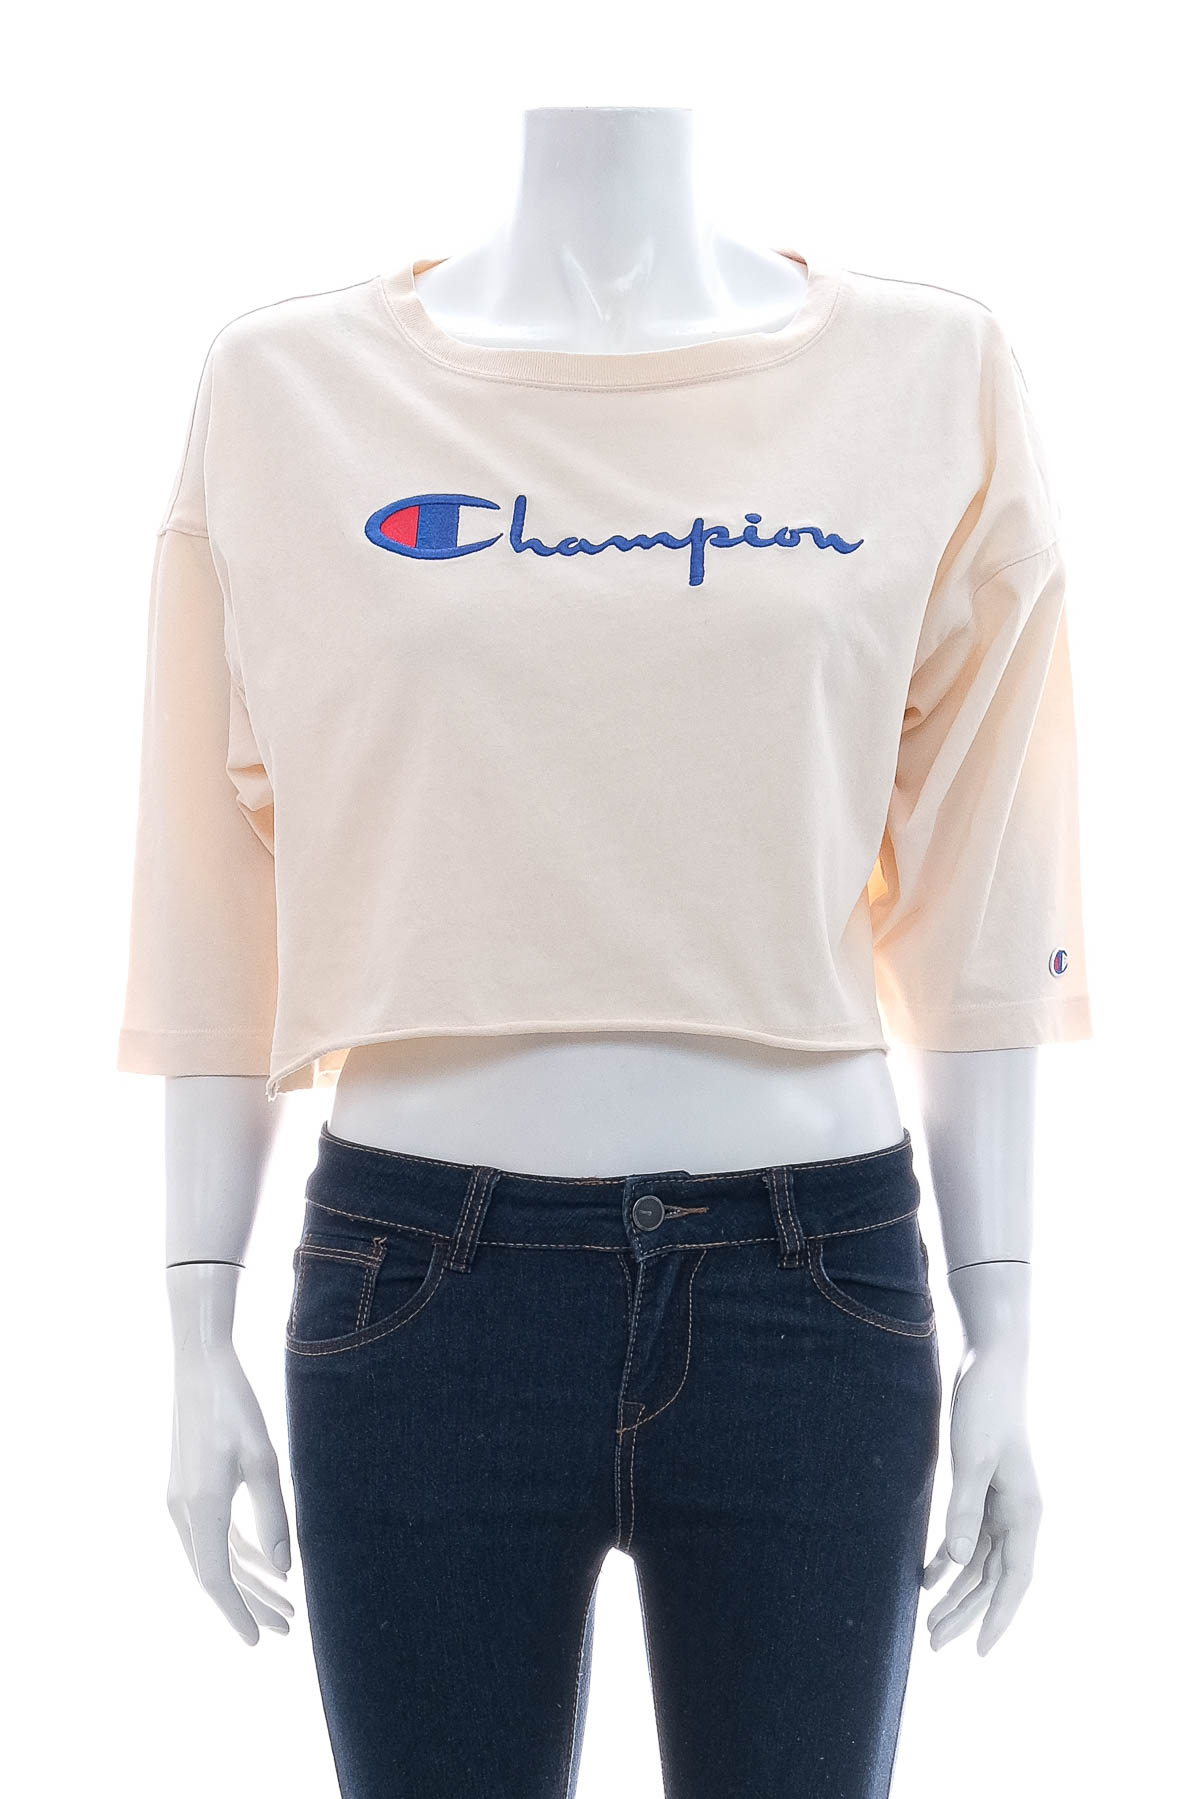 Дамска блуза - Champion - 0